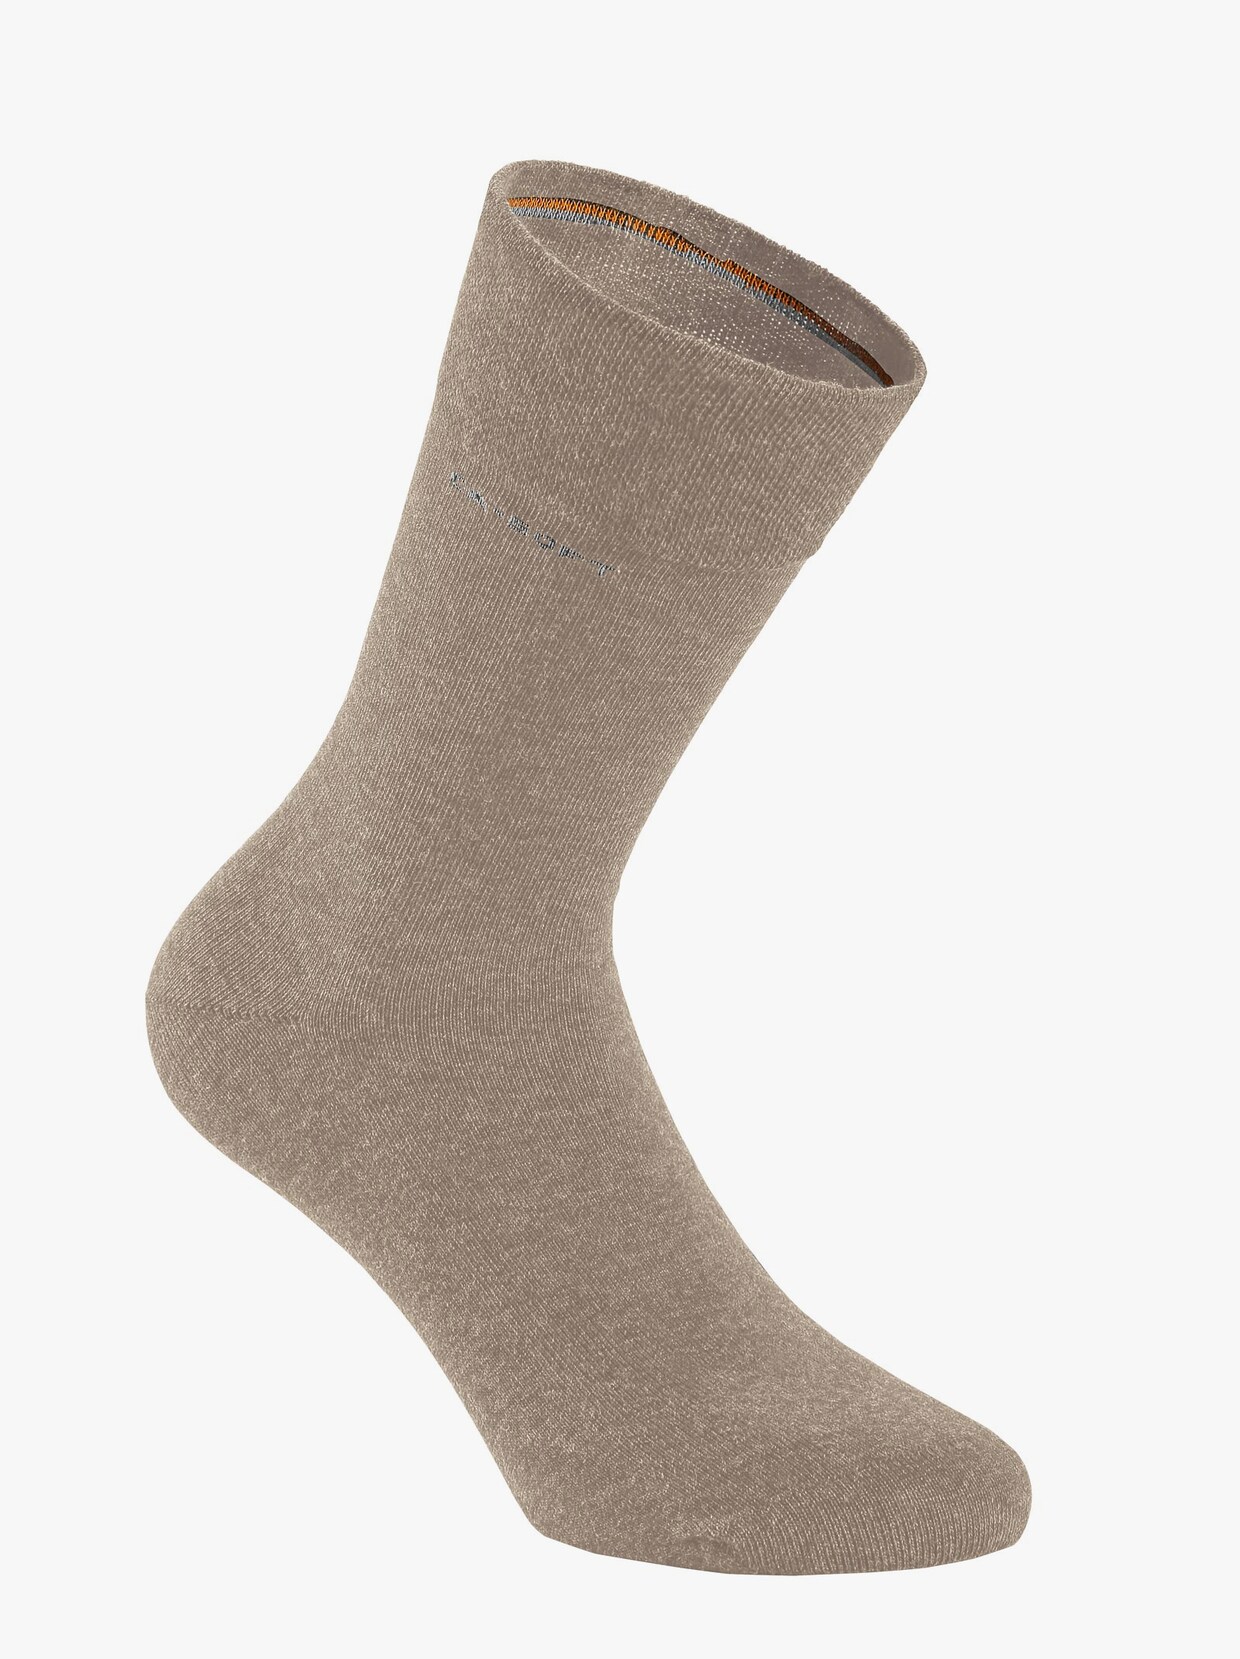 Camano Socken - sand-meliert